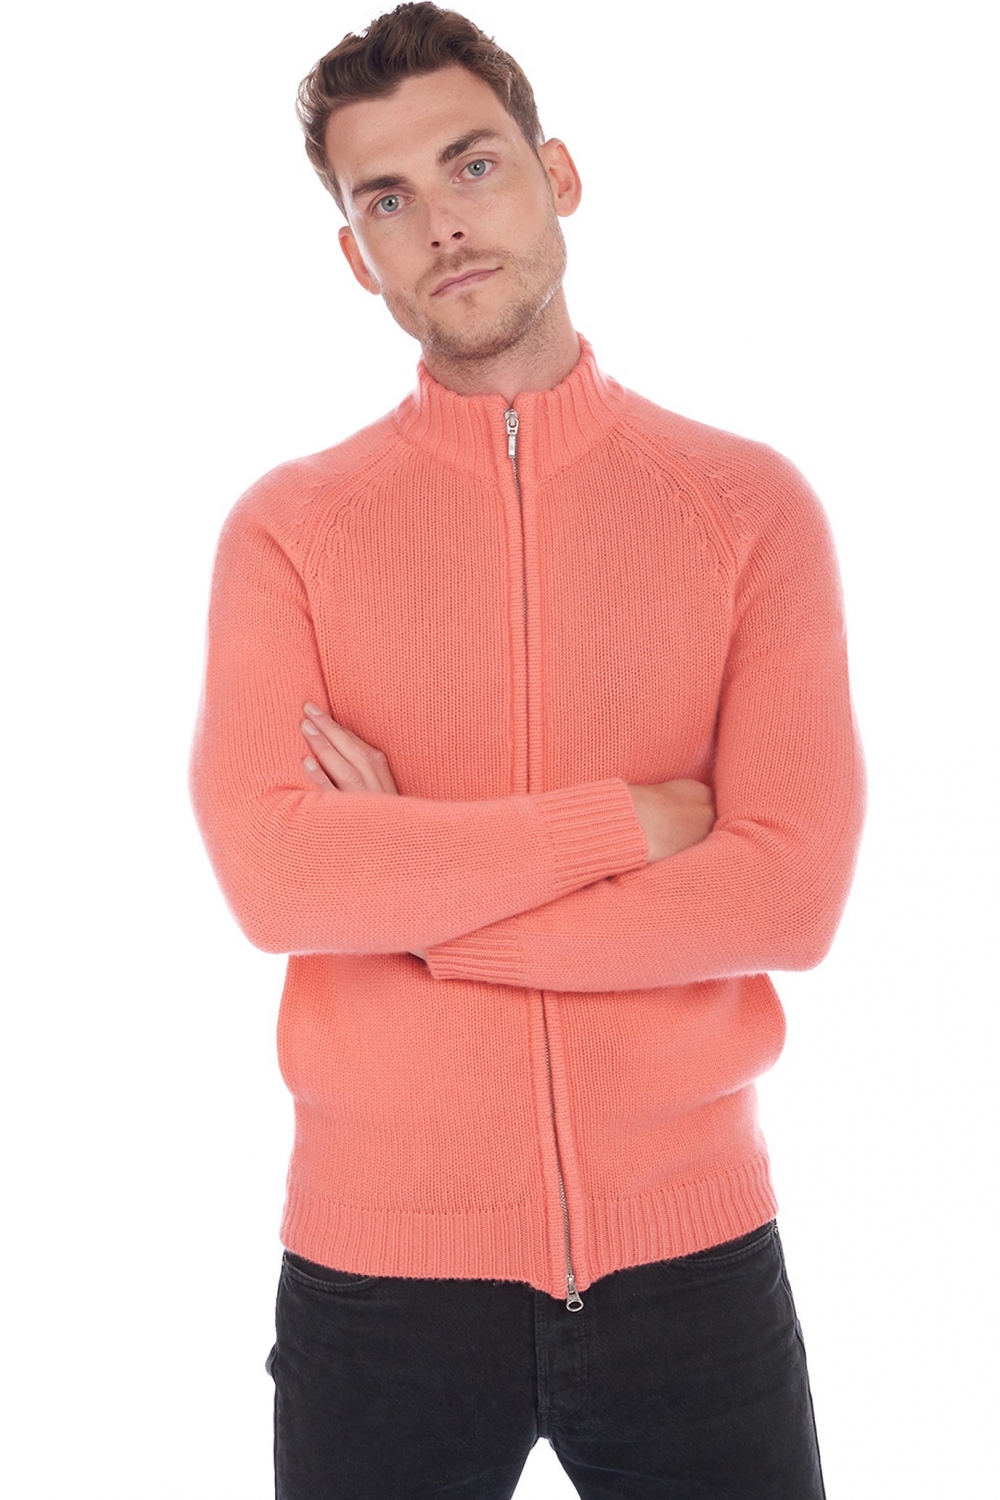 Cashmere men waistcoat sleeveless sweaters argos peach 2xl